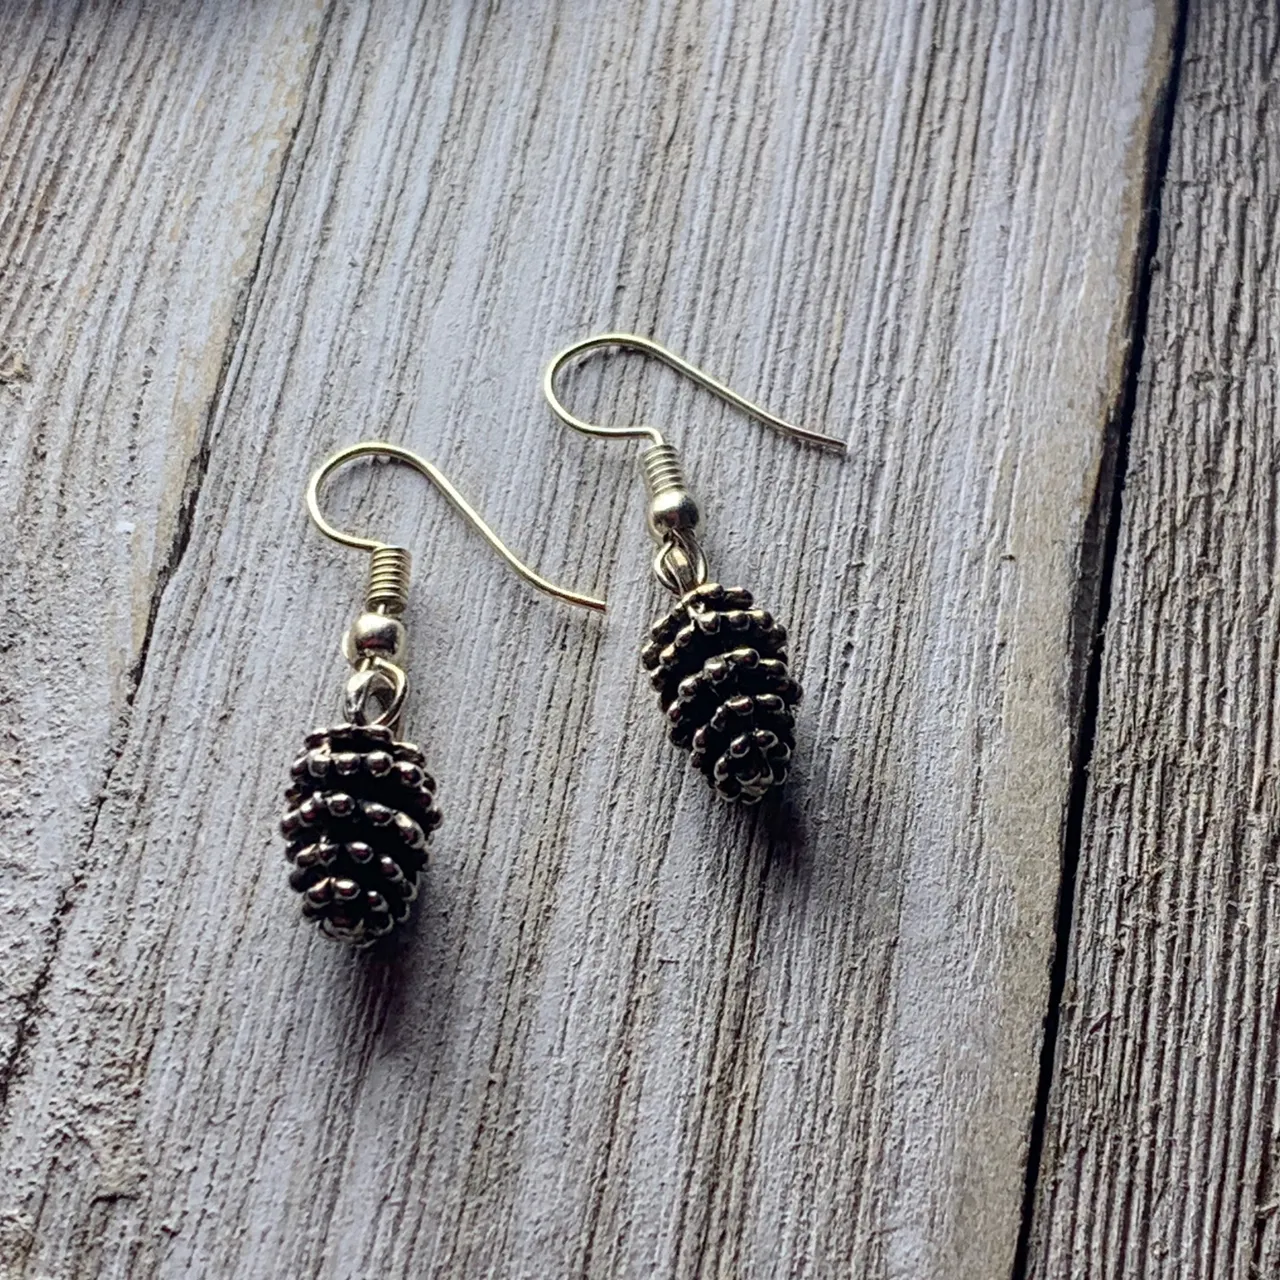 Pine cone earrings photo 1